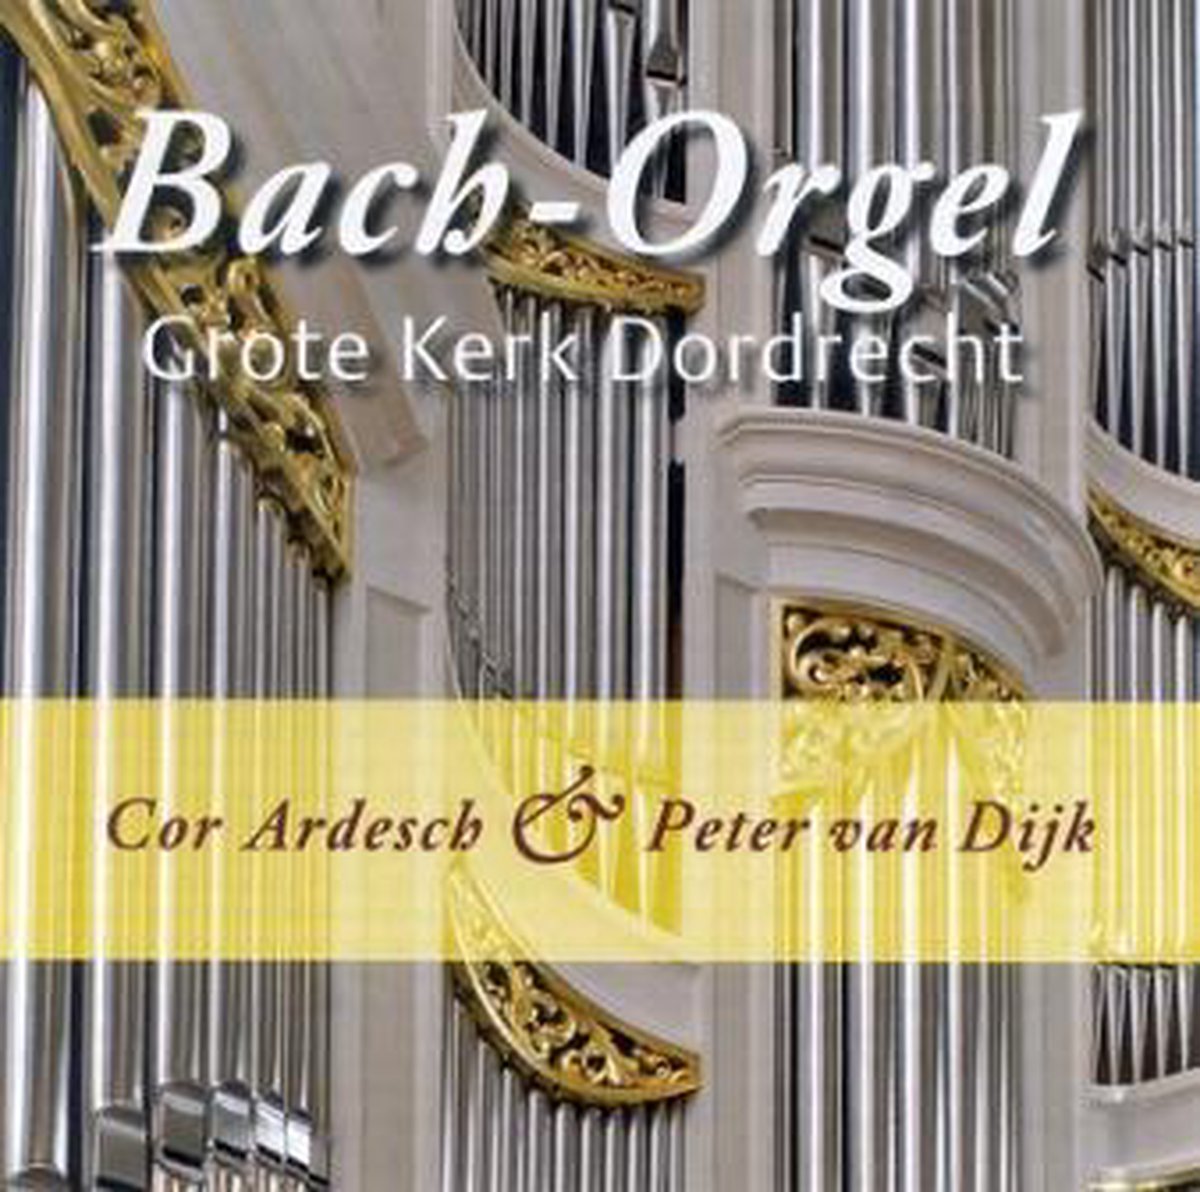 Bach-Orgel Grote Kerk Dordrecht - Cor Ardesch en Peter van Dijk